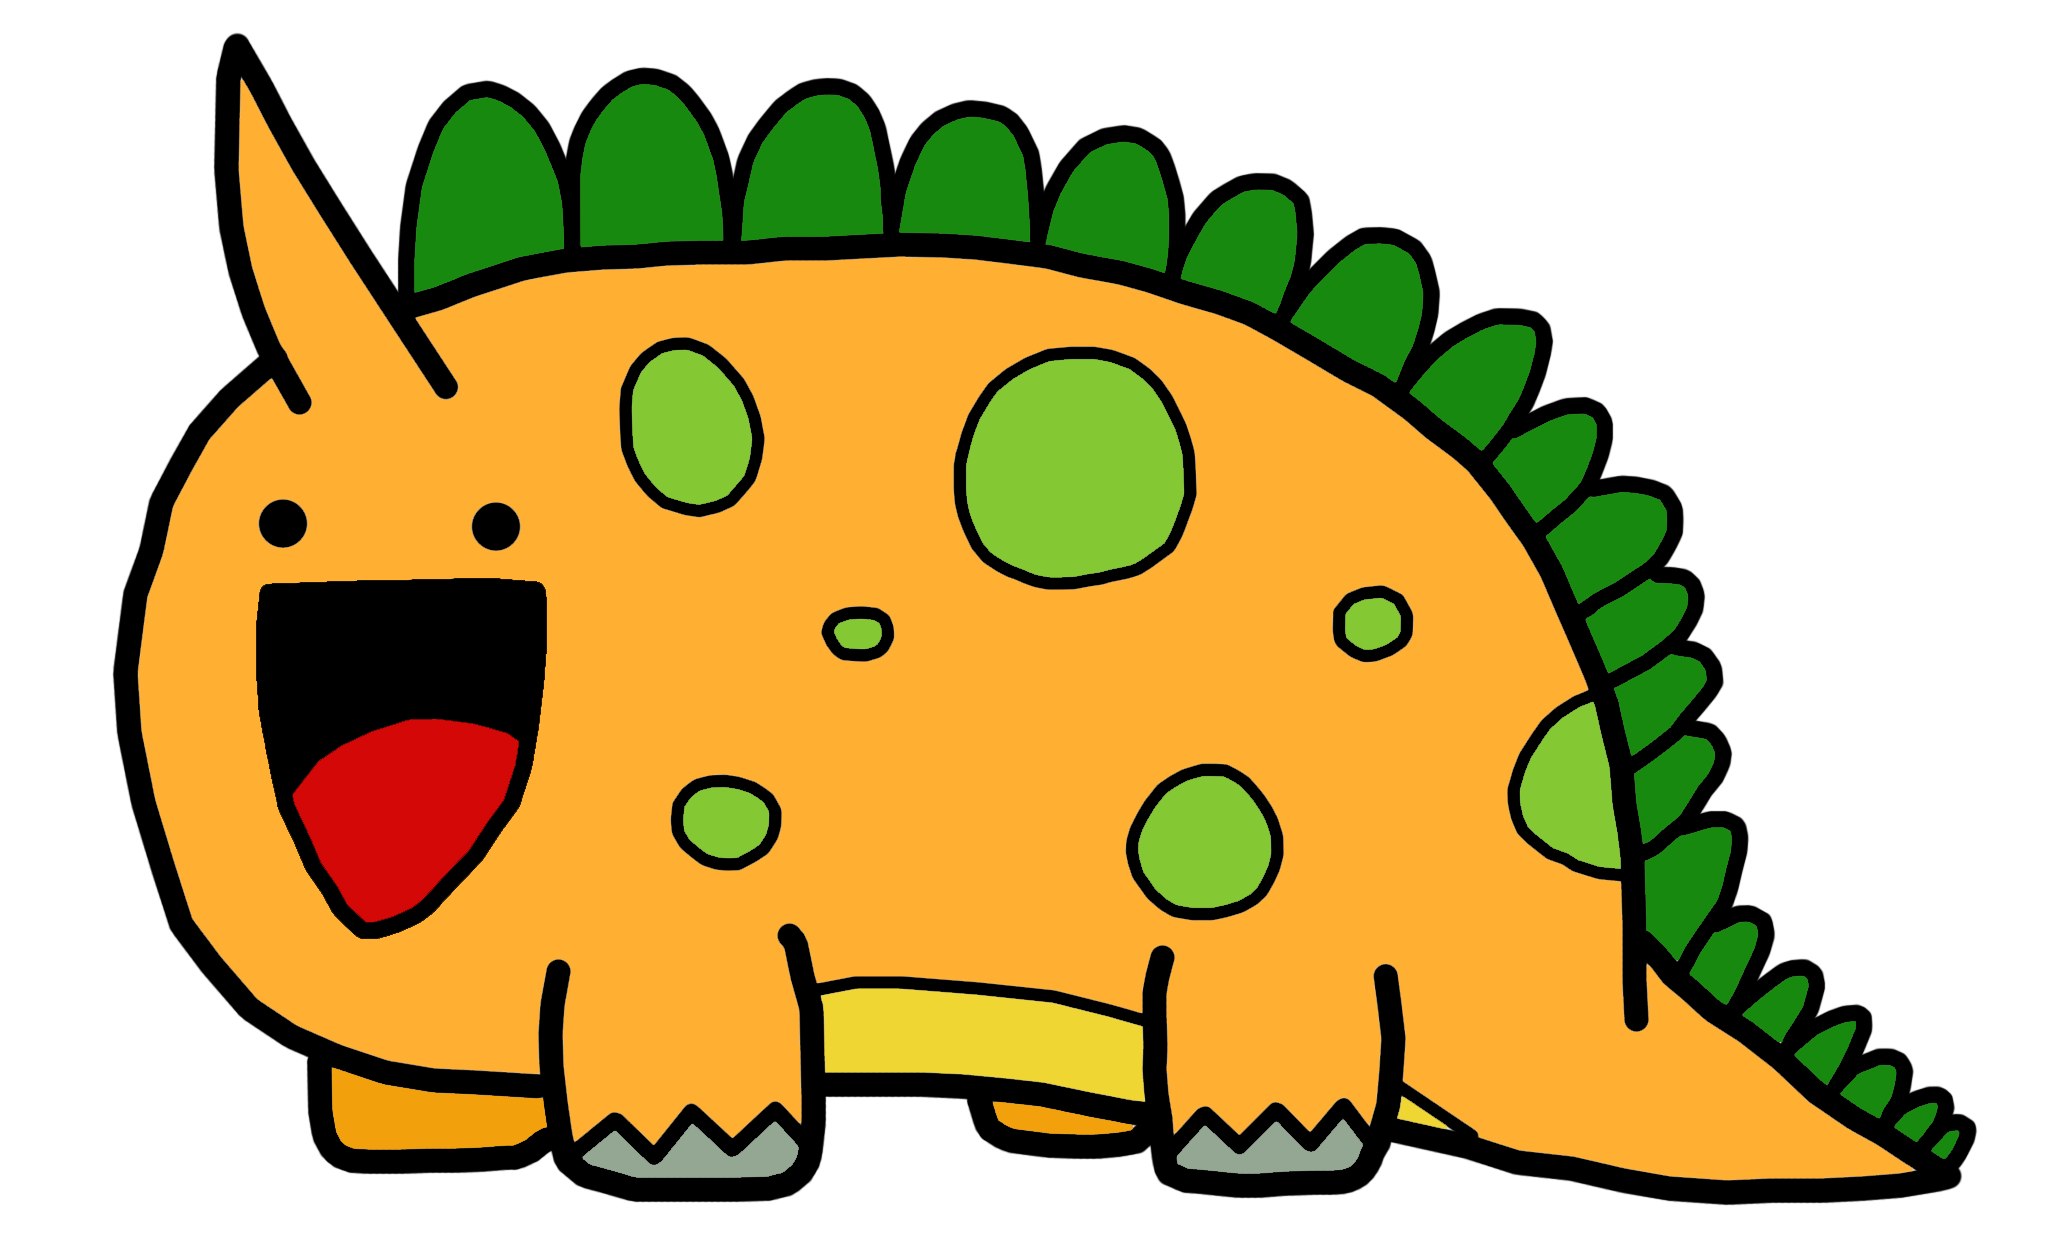 Cute Cartoon Dinosaur - ClipArt Best